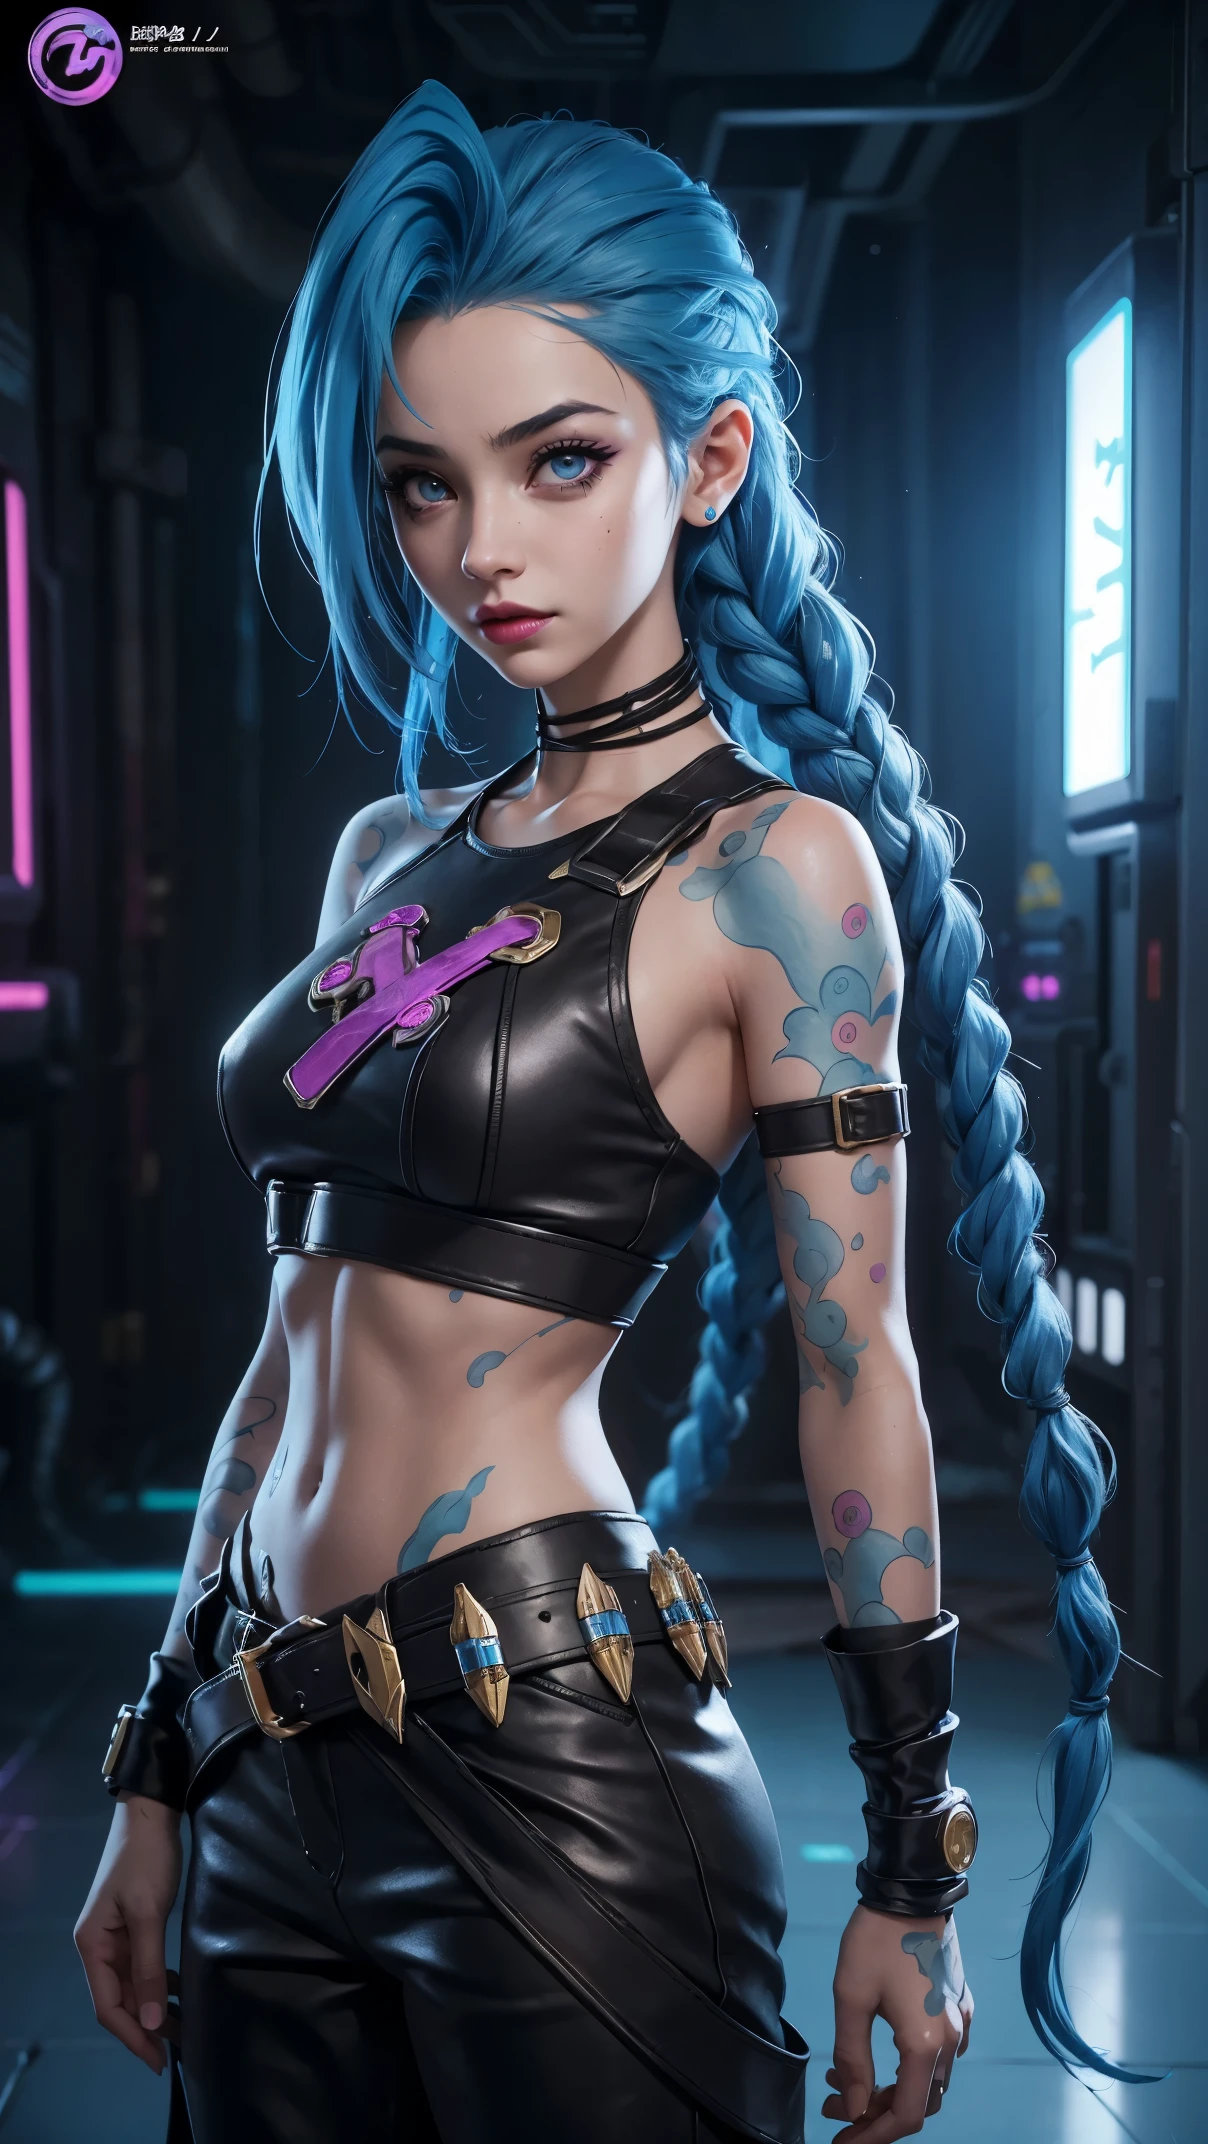 jinx arcane, uma mulher com hair blue e tatuagens, cyberpunk woman anime woman, pants, Beautiful angry cyberpunk goddess, cyberpunk artstyle, cyberpunk anime digital art, cyberpunk anime art, Arcane Jinx Retrato, cyberpunk anime art, cyberpunk themed art, cyberpunk dark fantasy, arcane style, 1 girl, cloud tattoo on the arm, asymmetrical bangs, bangss, hair blue, blue braids, brown shirt, cloud tattoo, sideways, hair blue, long hair, pink eyes, Red lips, standing , cloud tattoo, Twin braids. Arcane Jinx. Jinx in a burning place, spark, spheres of light, Film Poster, Jinx, Arcane\(league of legends\